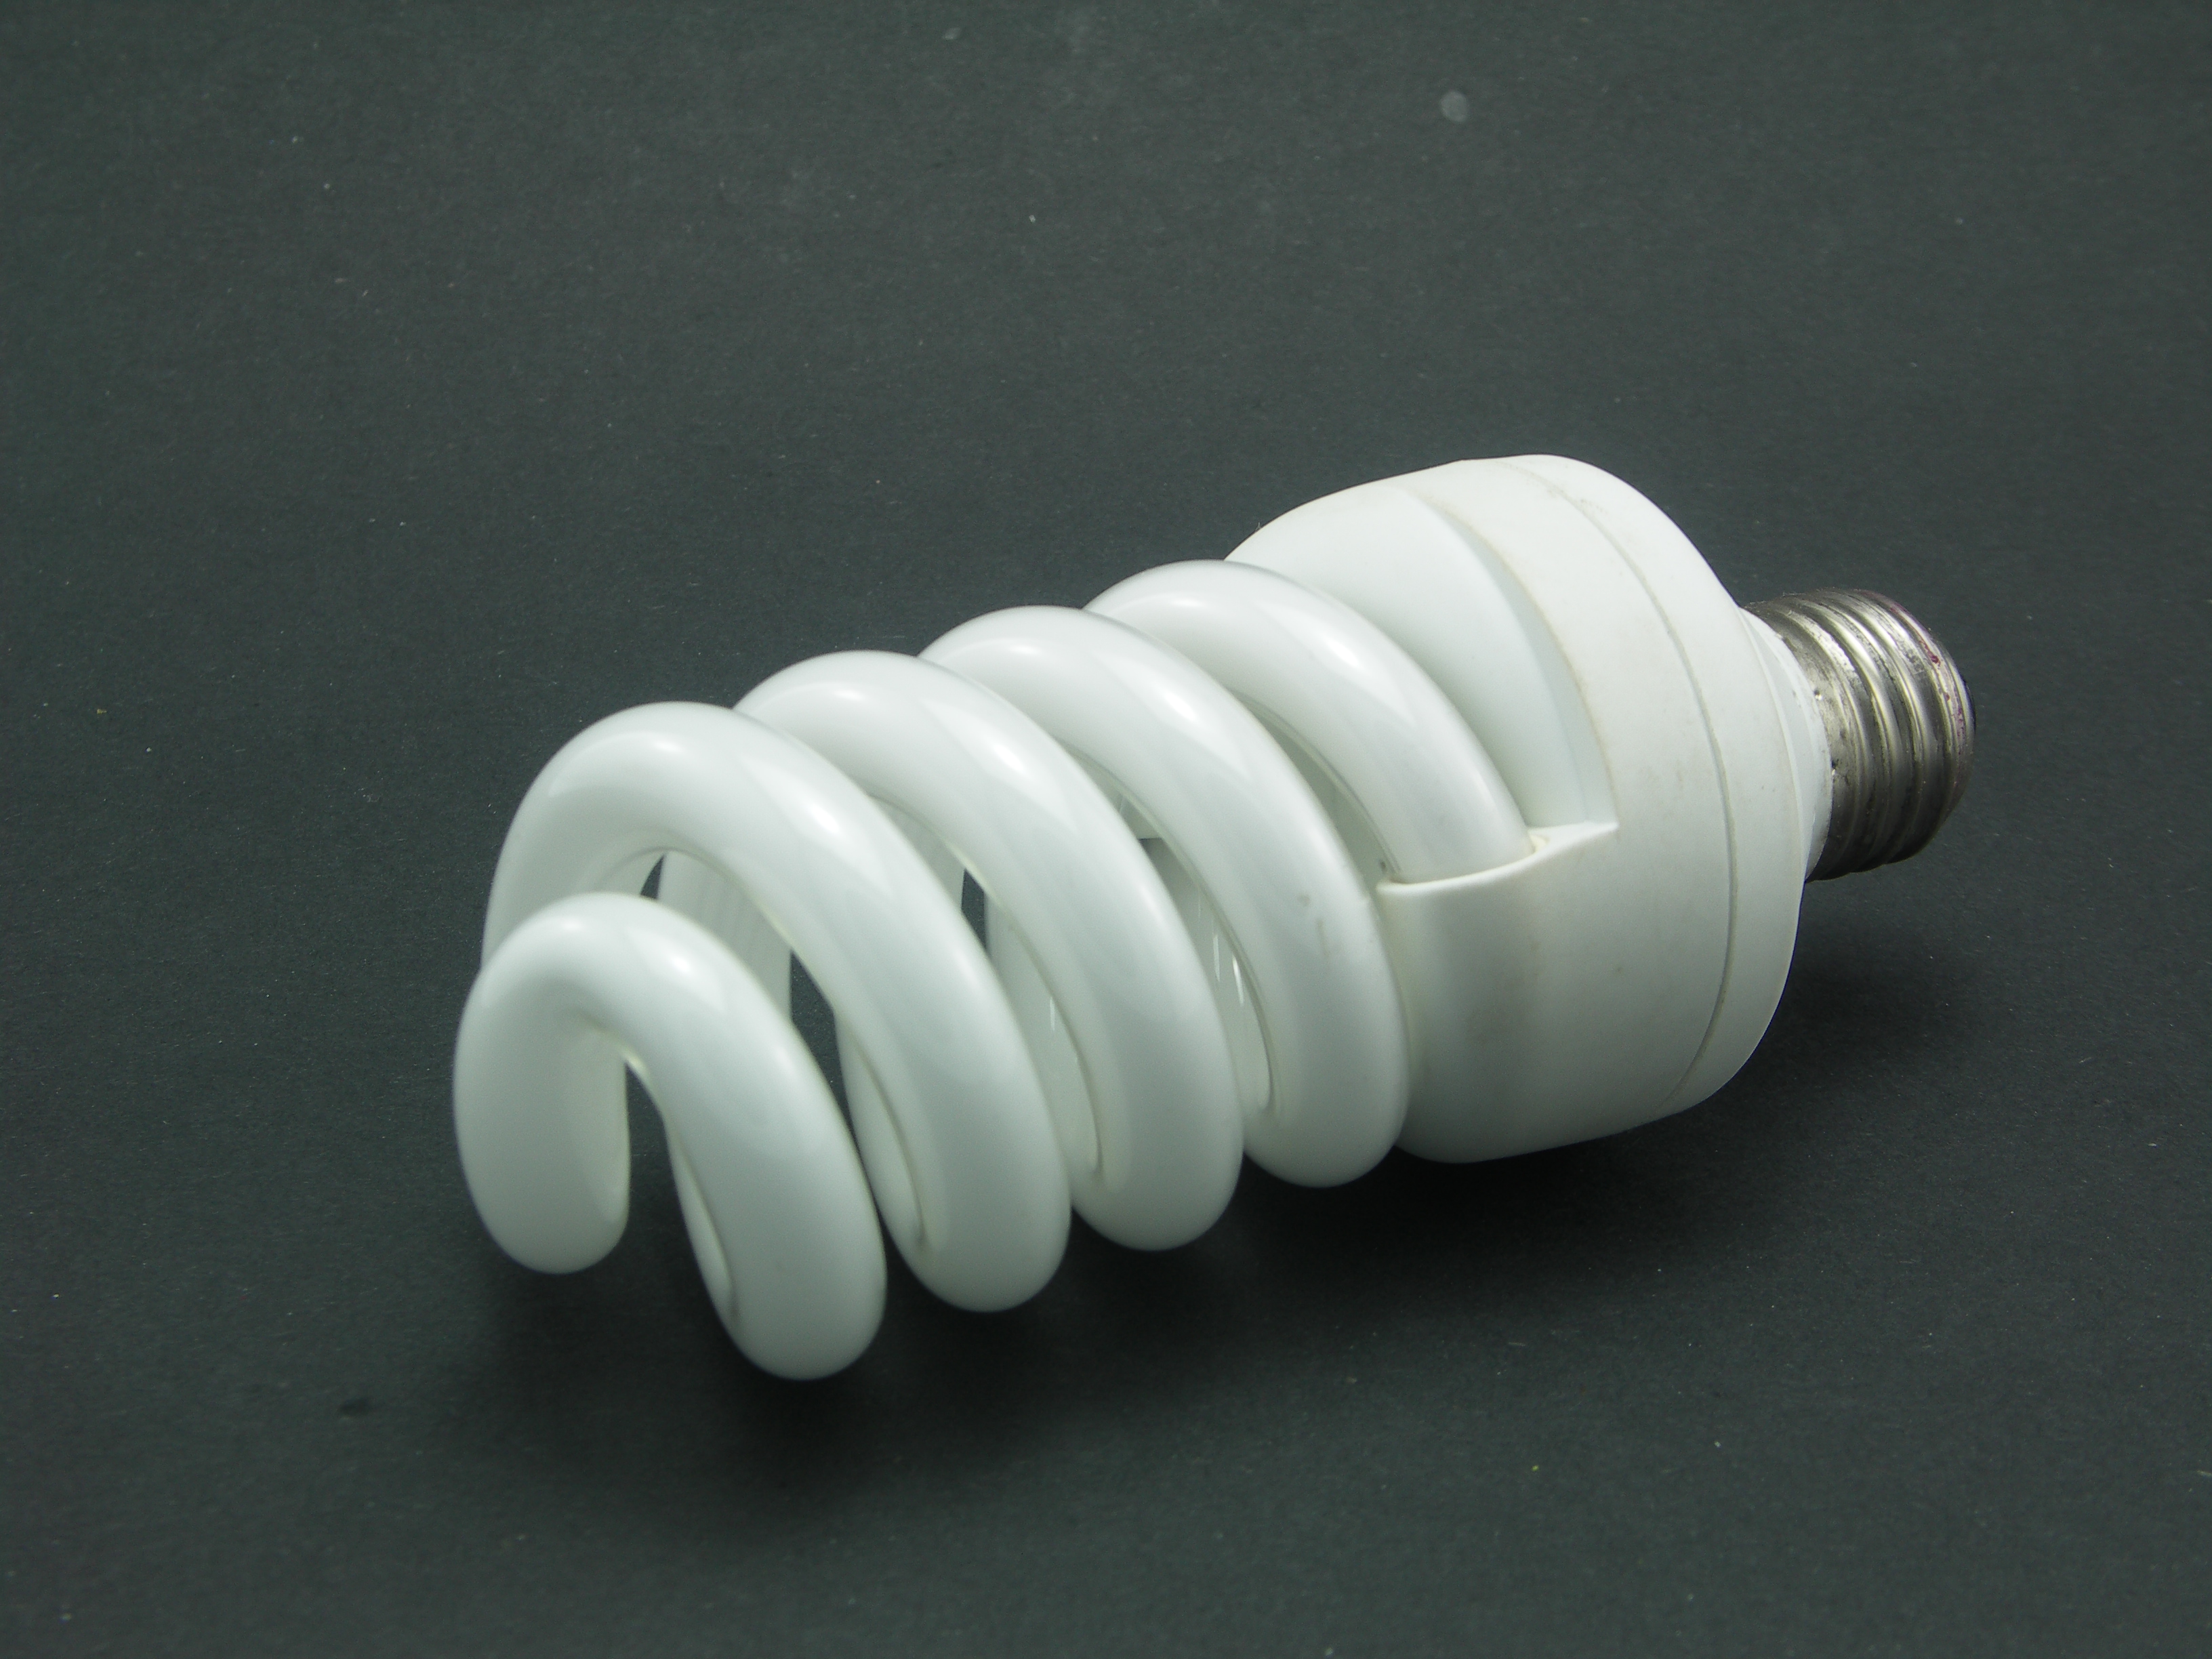 Energy saving light bulb photo